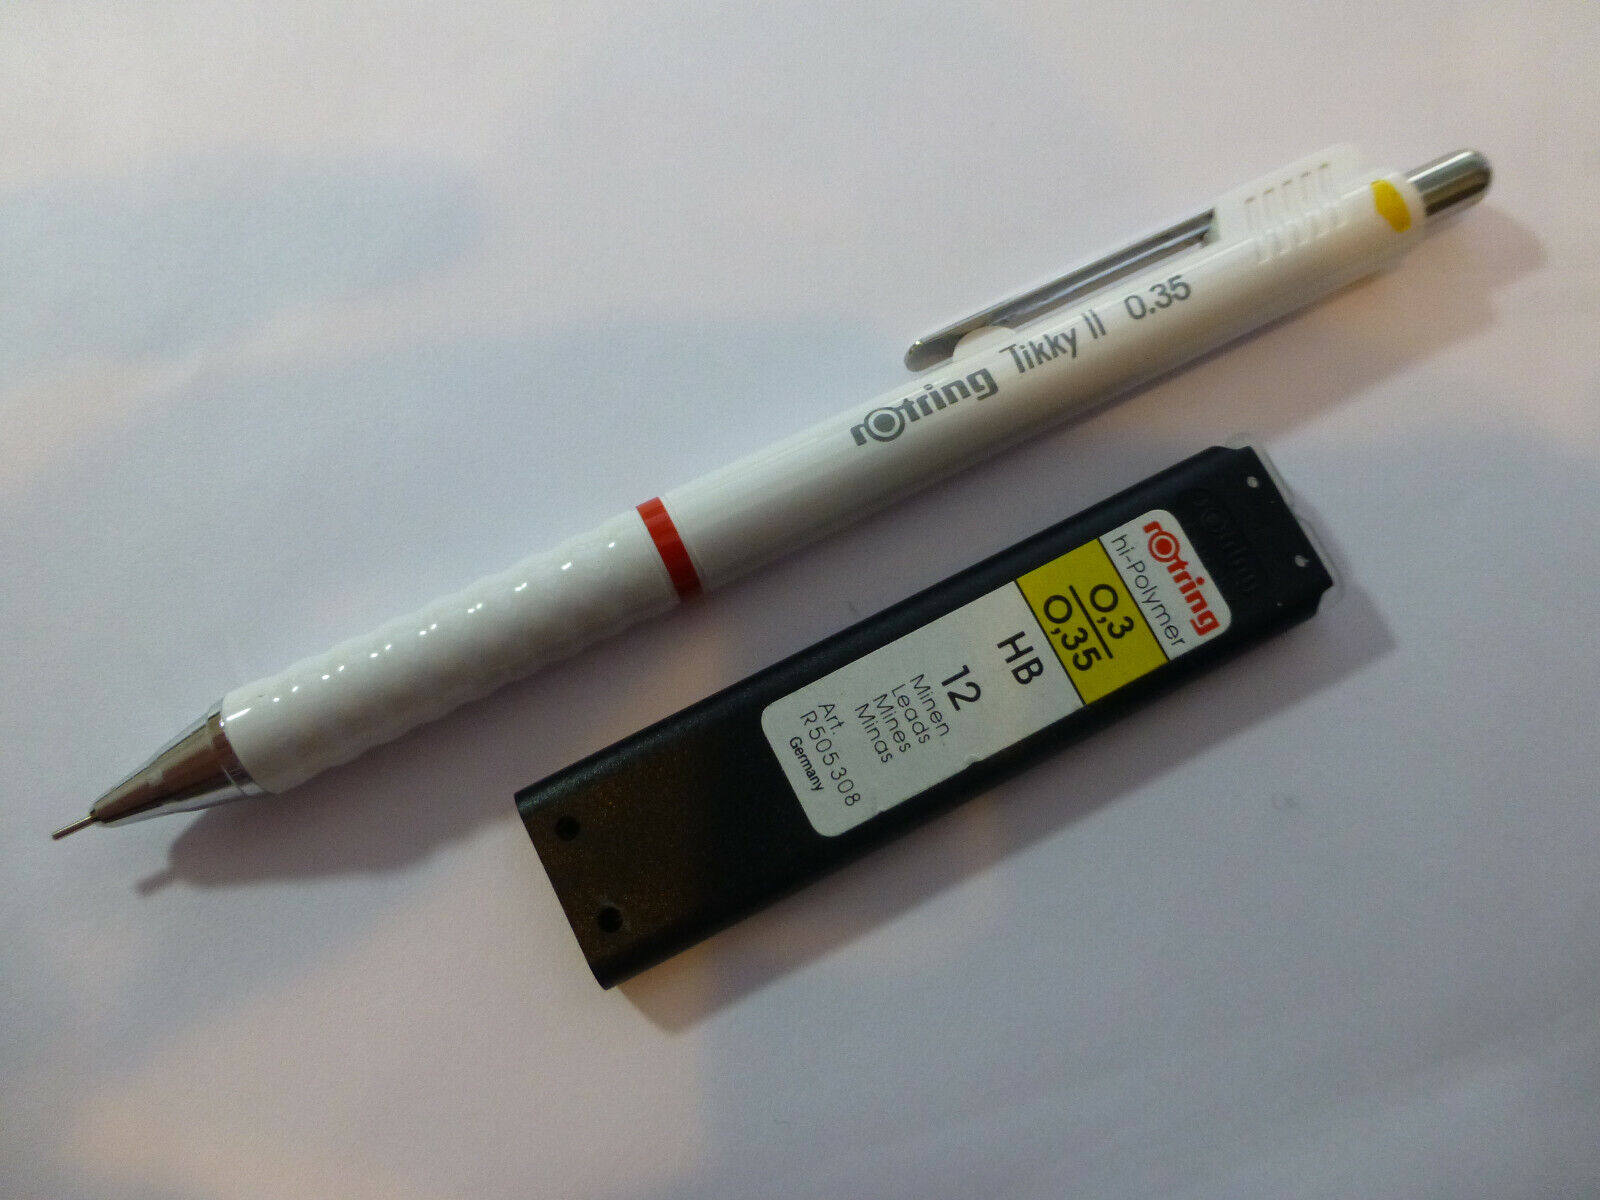 Rotring Tikky II white 0.35 Pencil New & Rare